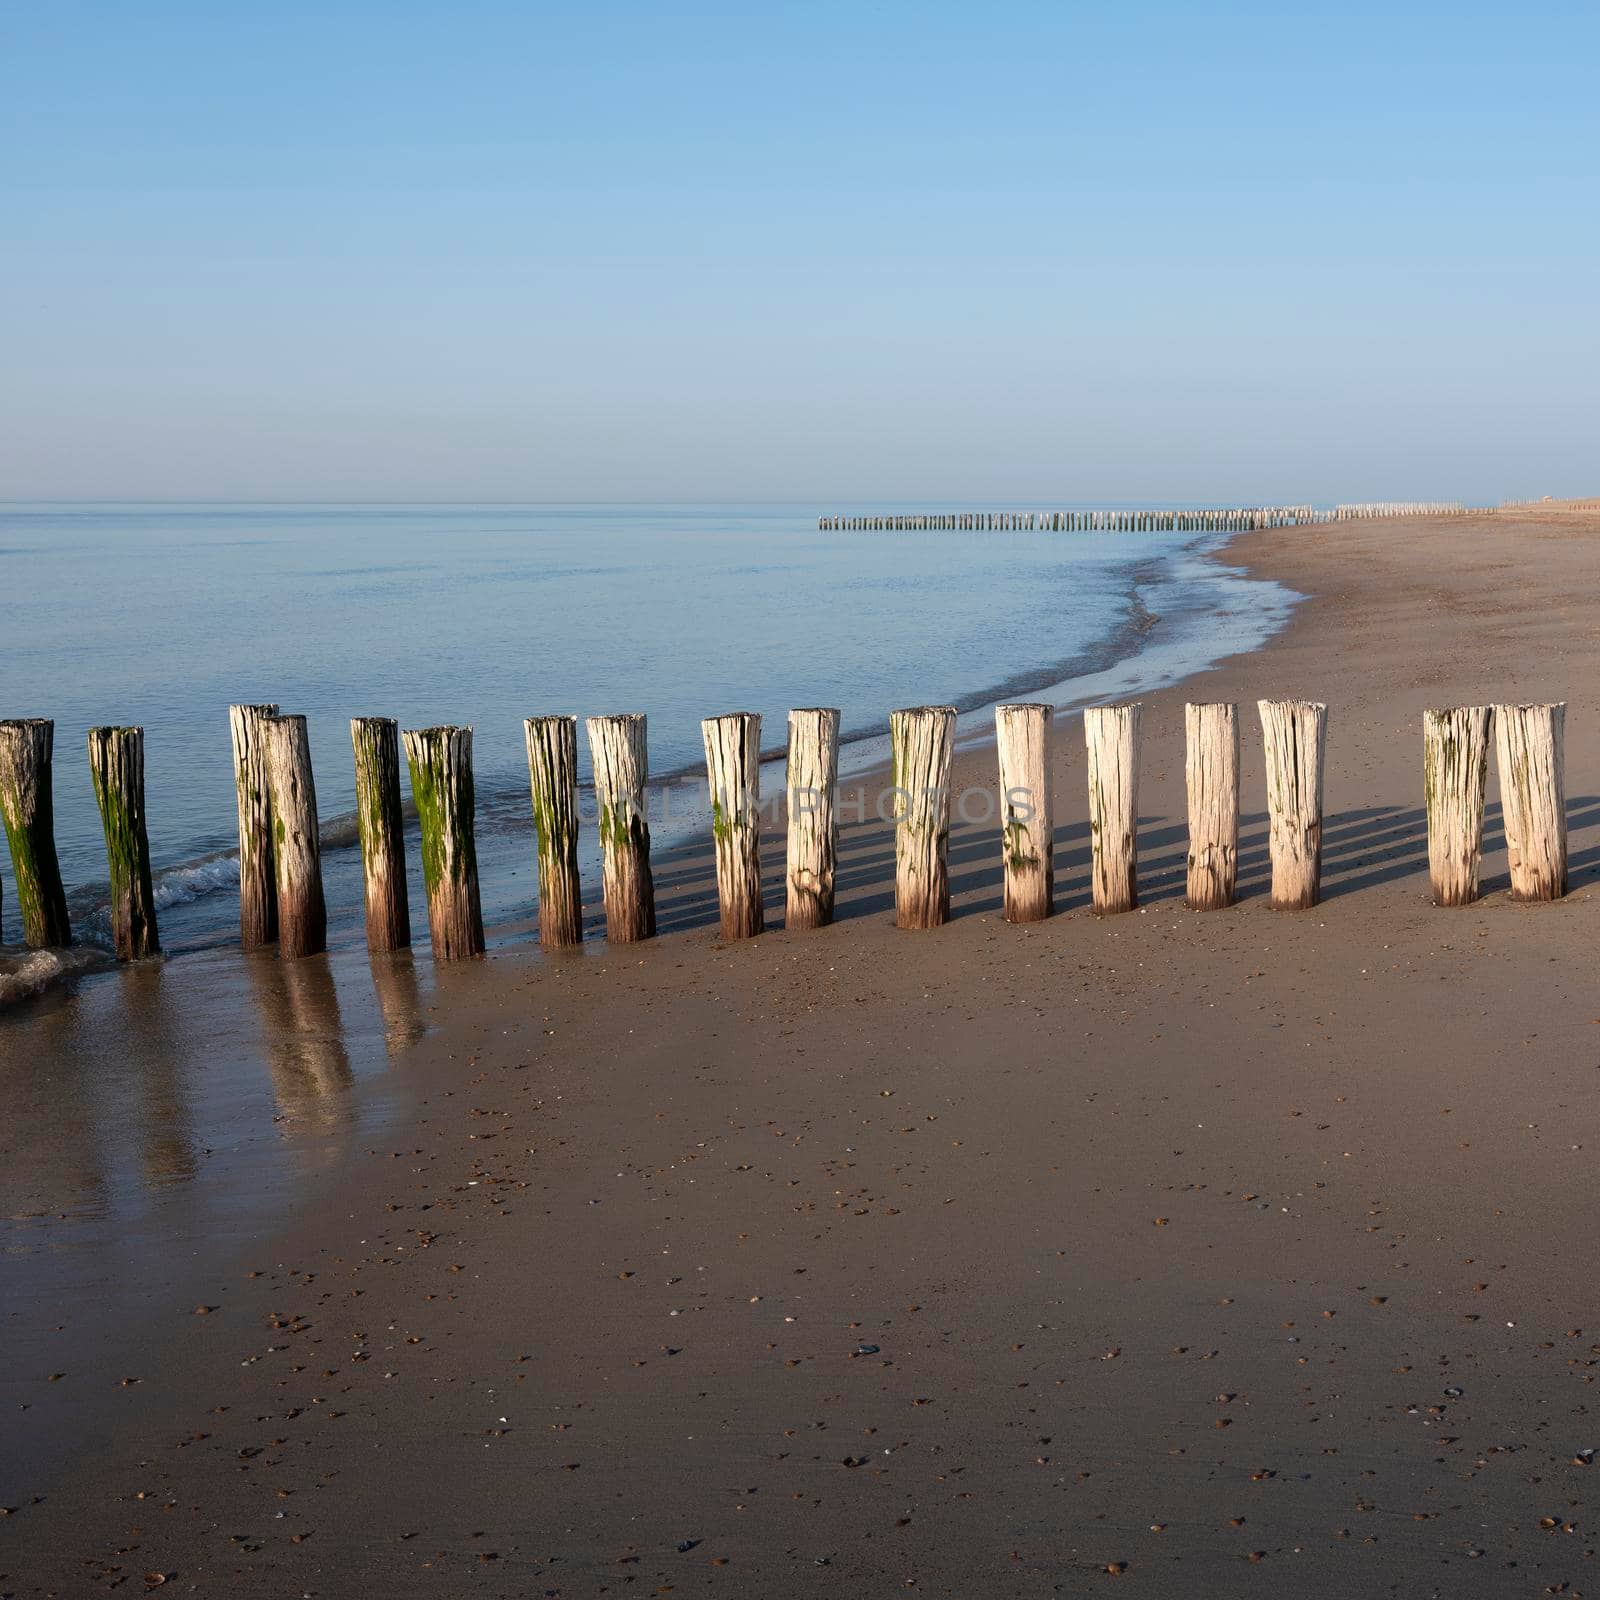 row of poles on beach of zeeland in the netherlands under blue sky in spring by ahavelaar